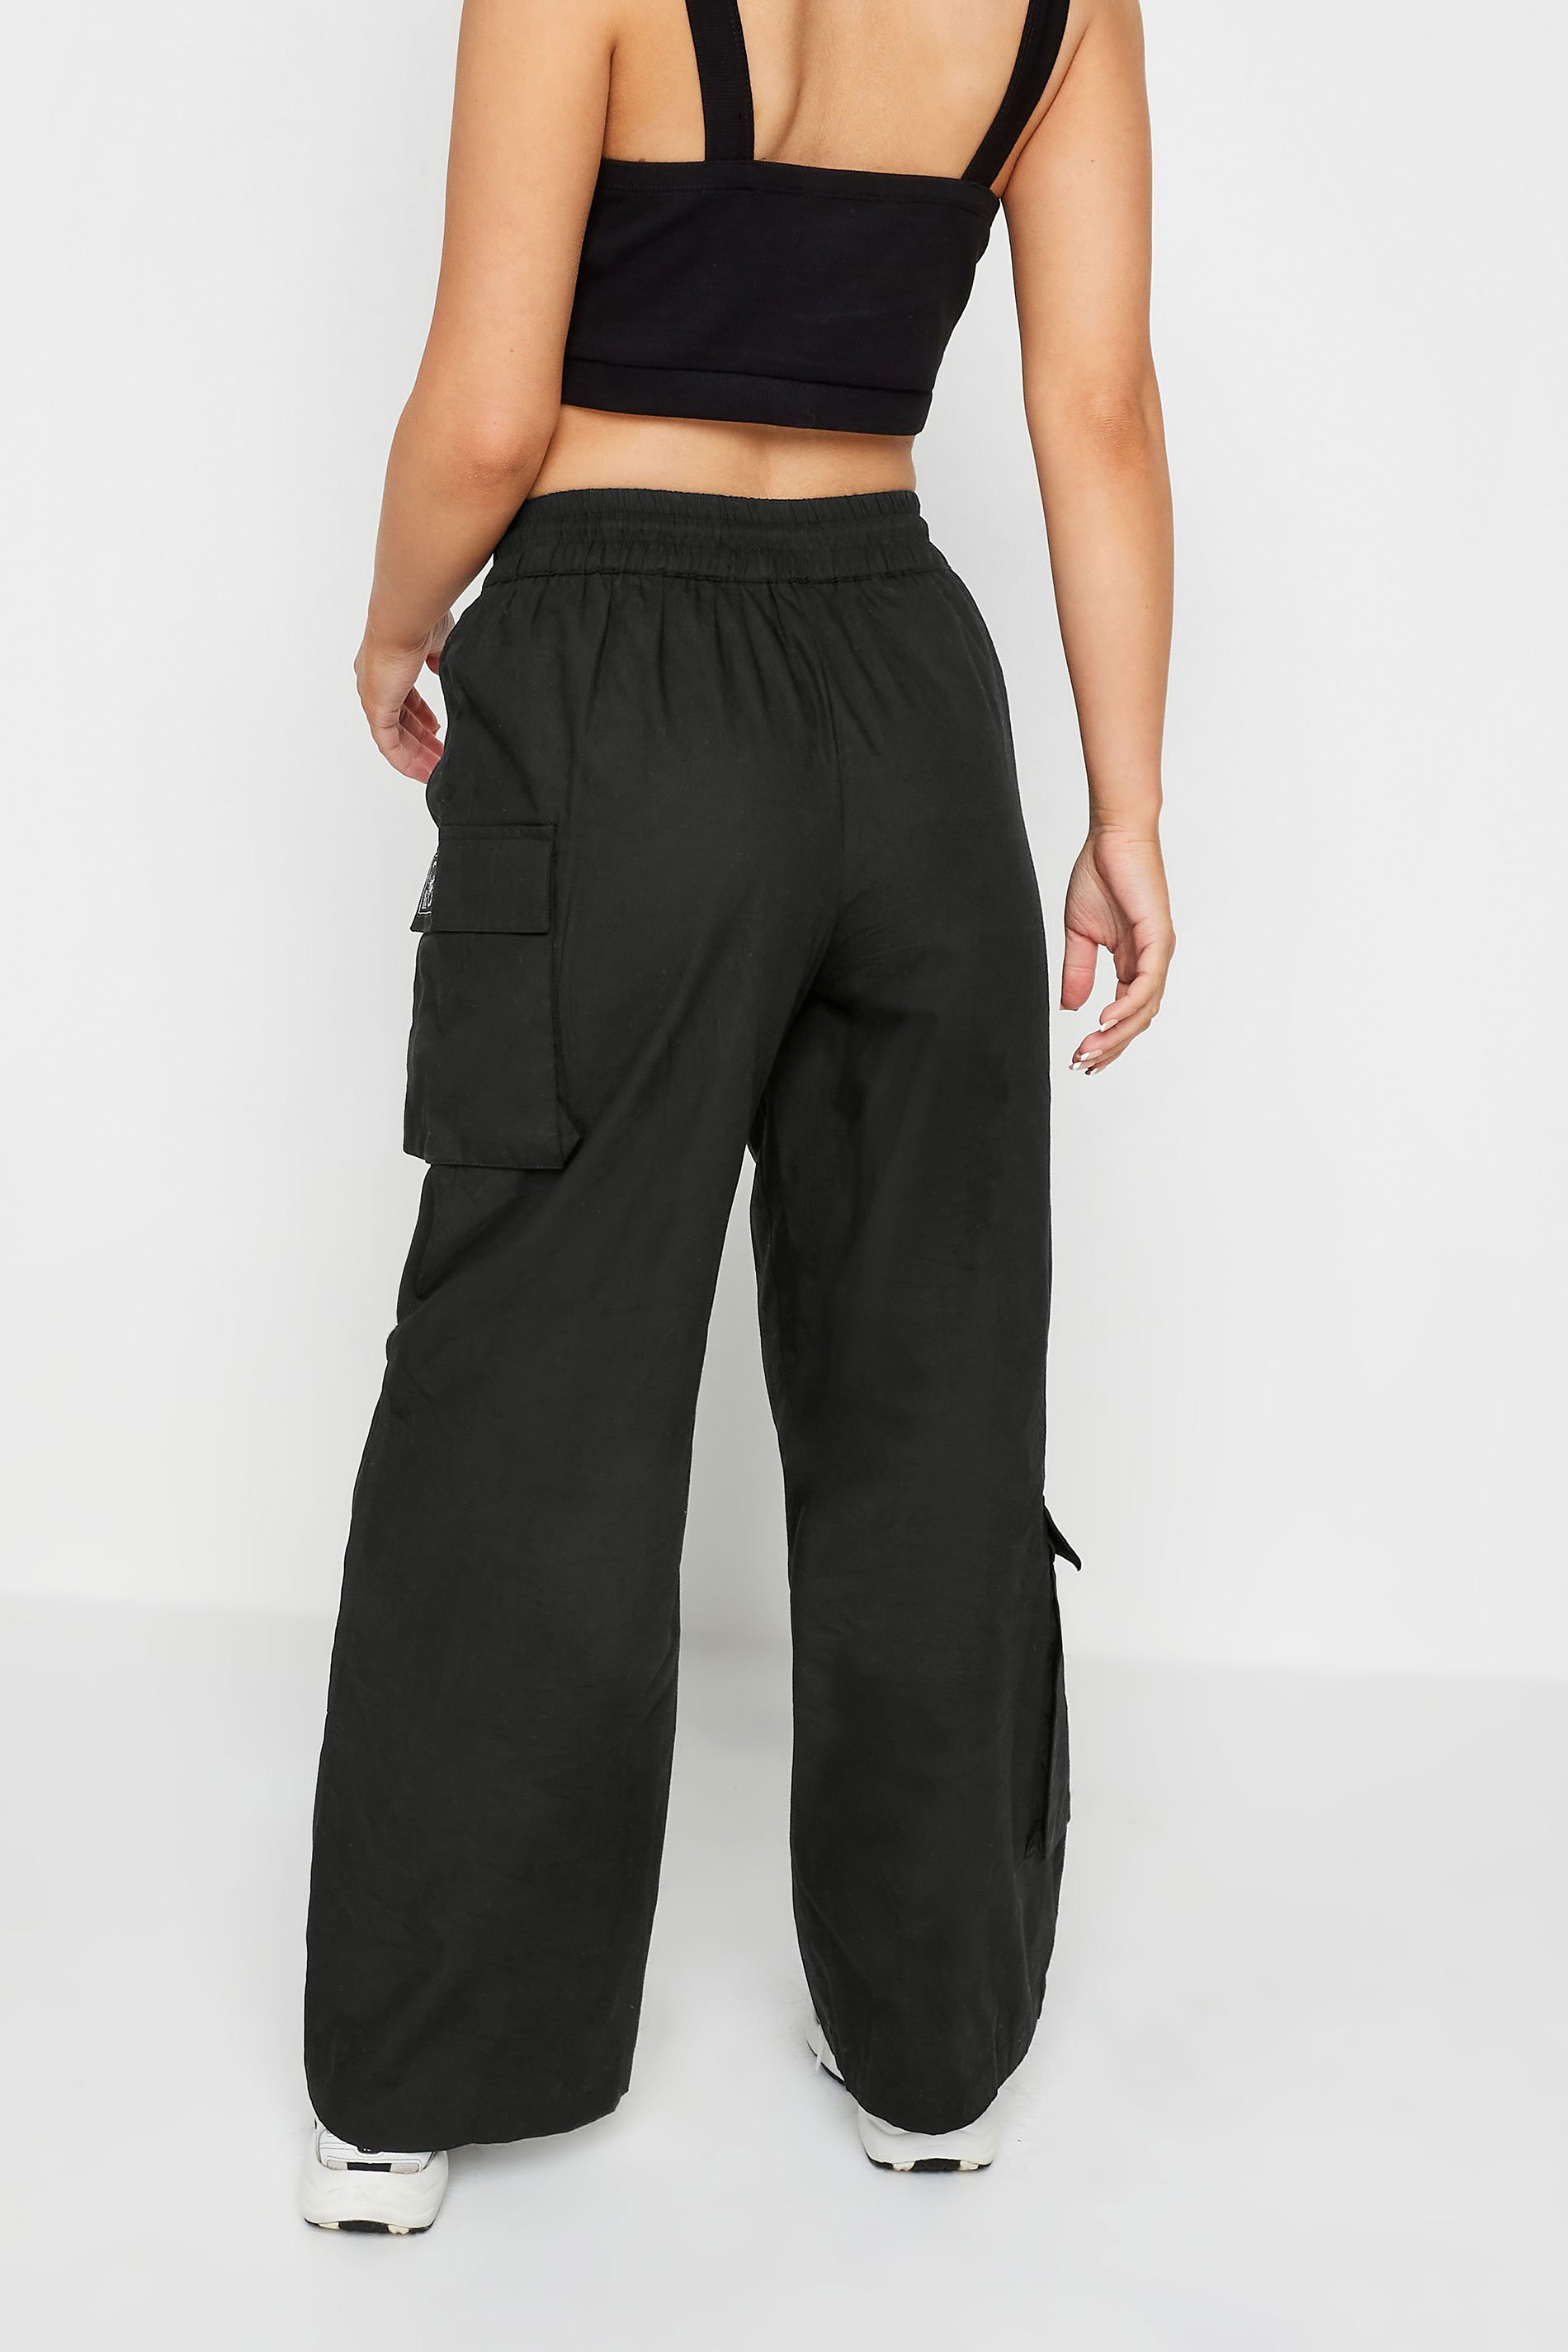 PixieGirl Black Pocket Detail Cargo Trousers | PixieGirl